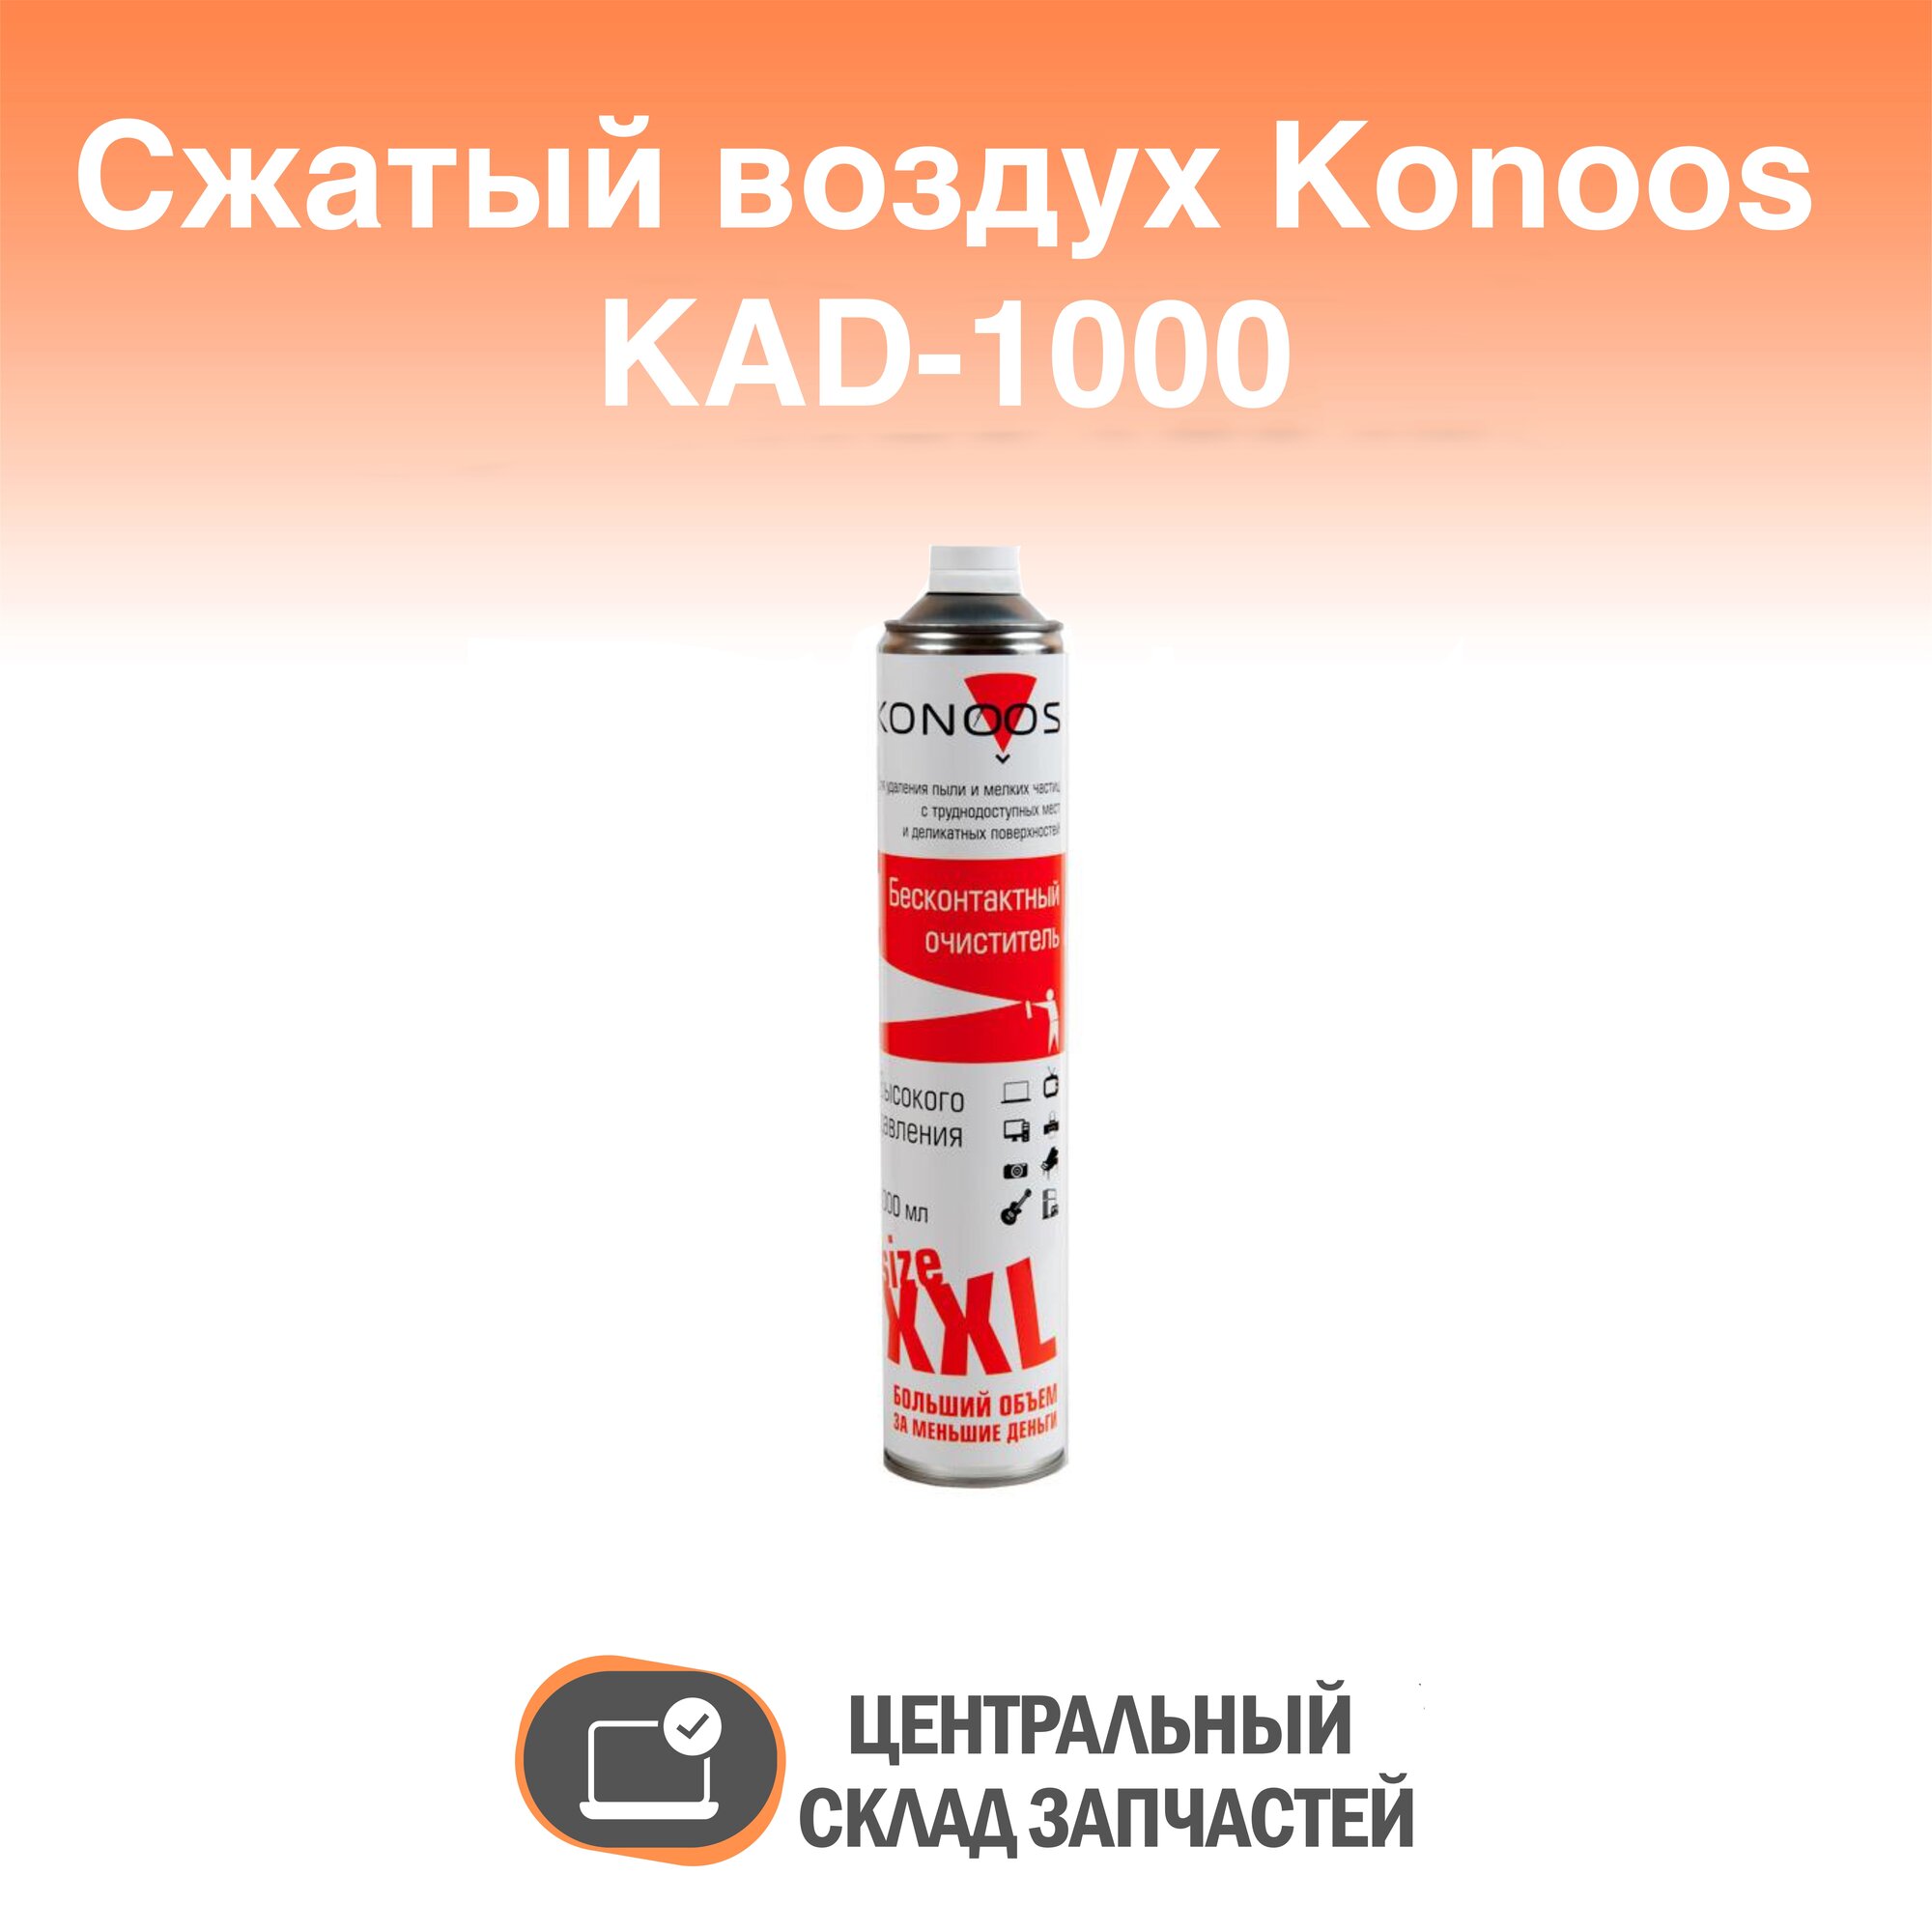 Konoos KAD-1000